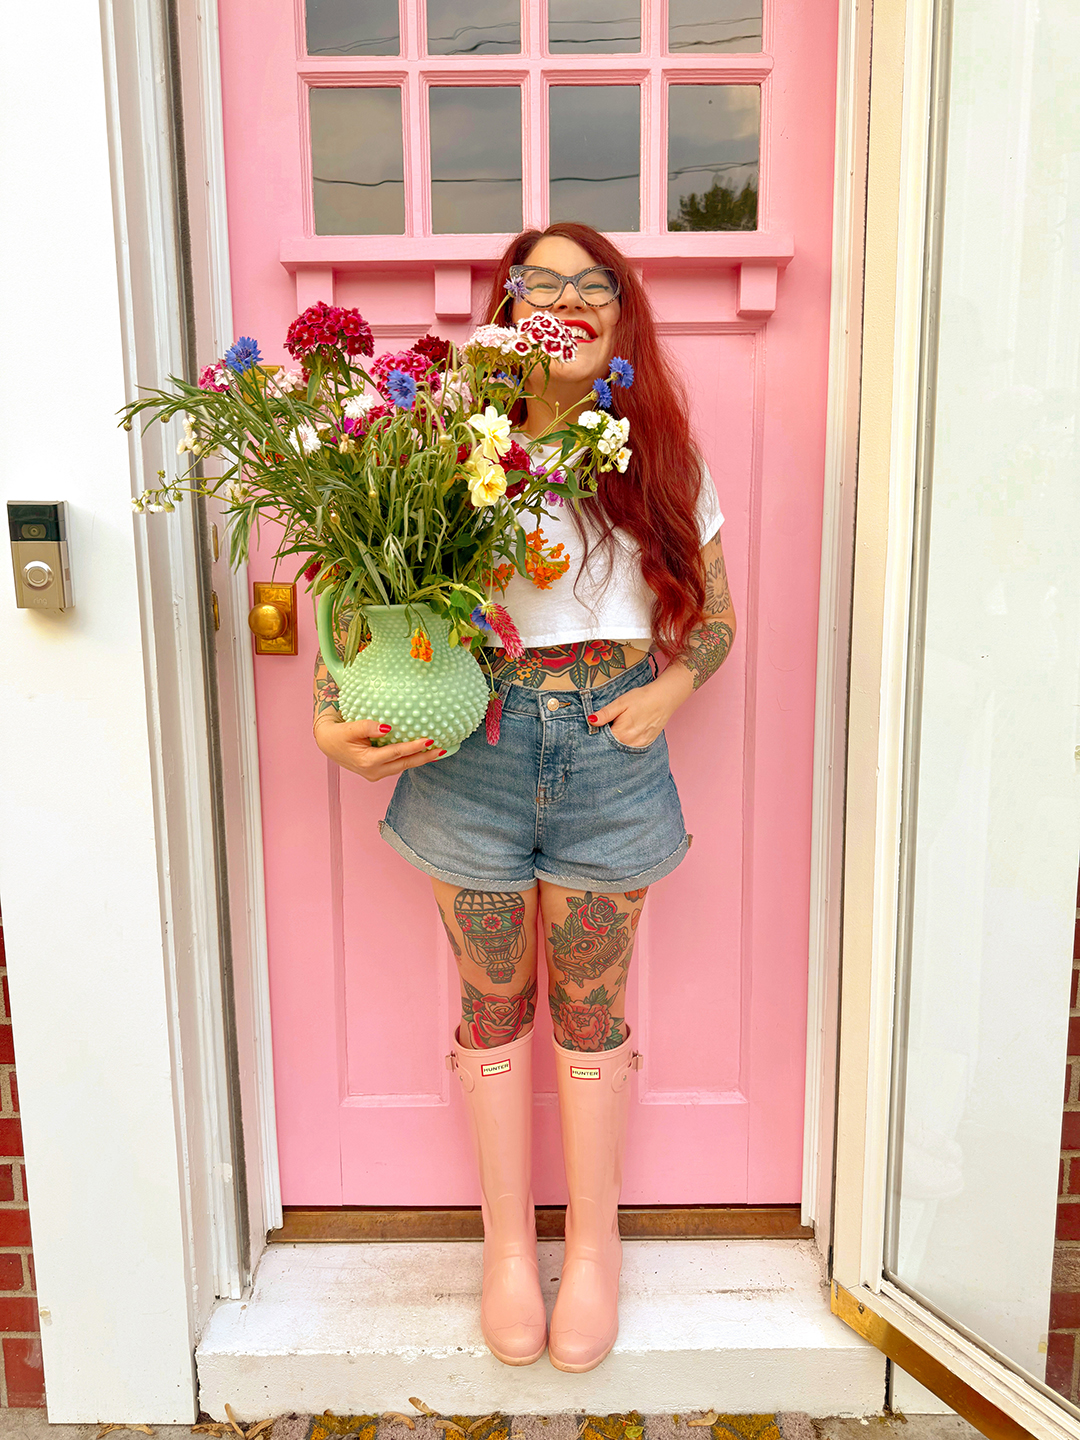 Woman holding vase full of wildflowers in front of pink door